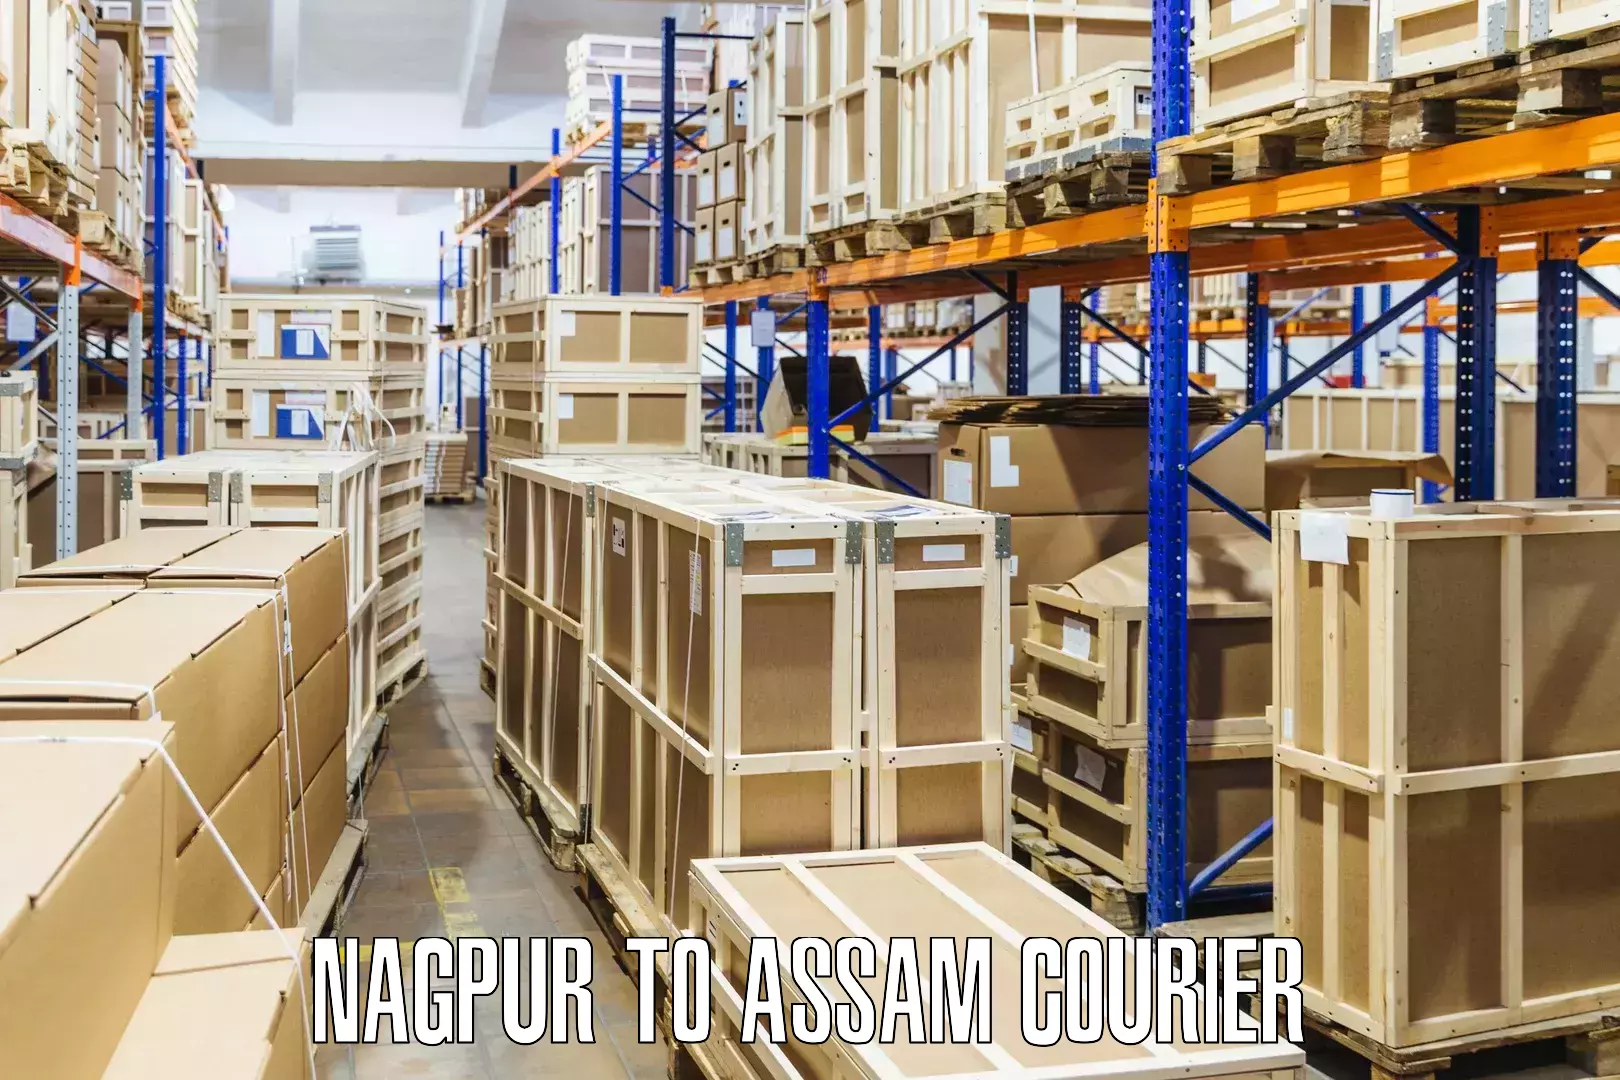 International courier networks Nagpur to Assam